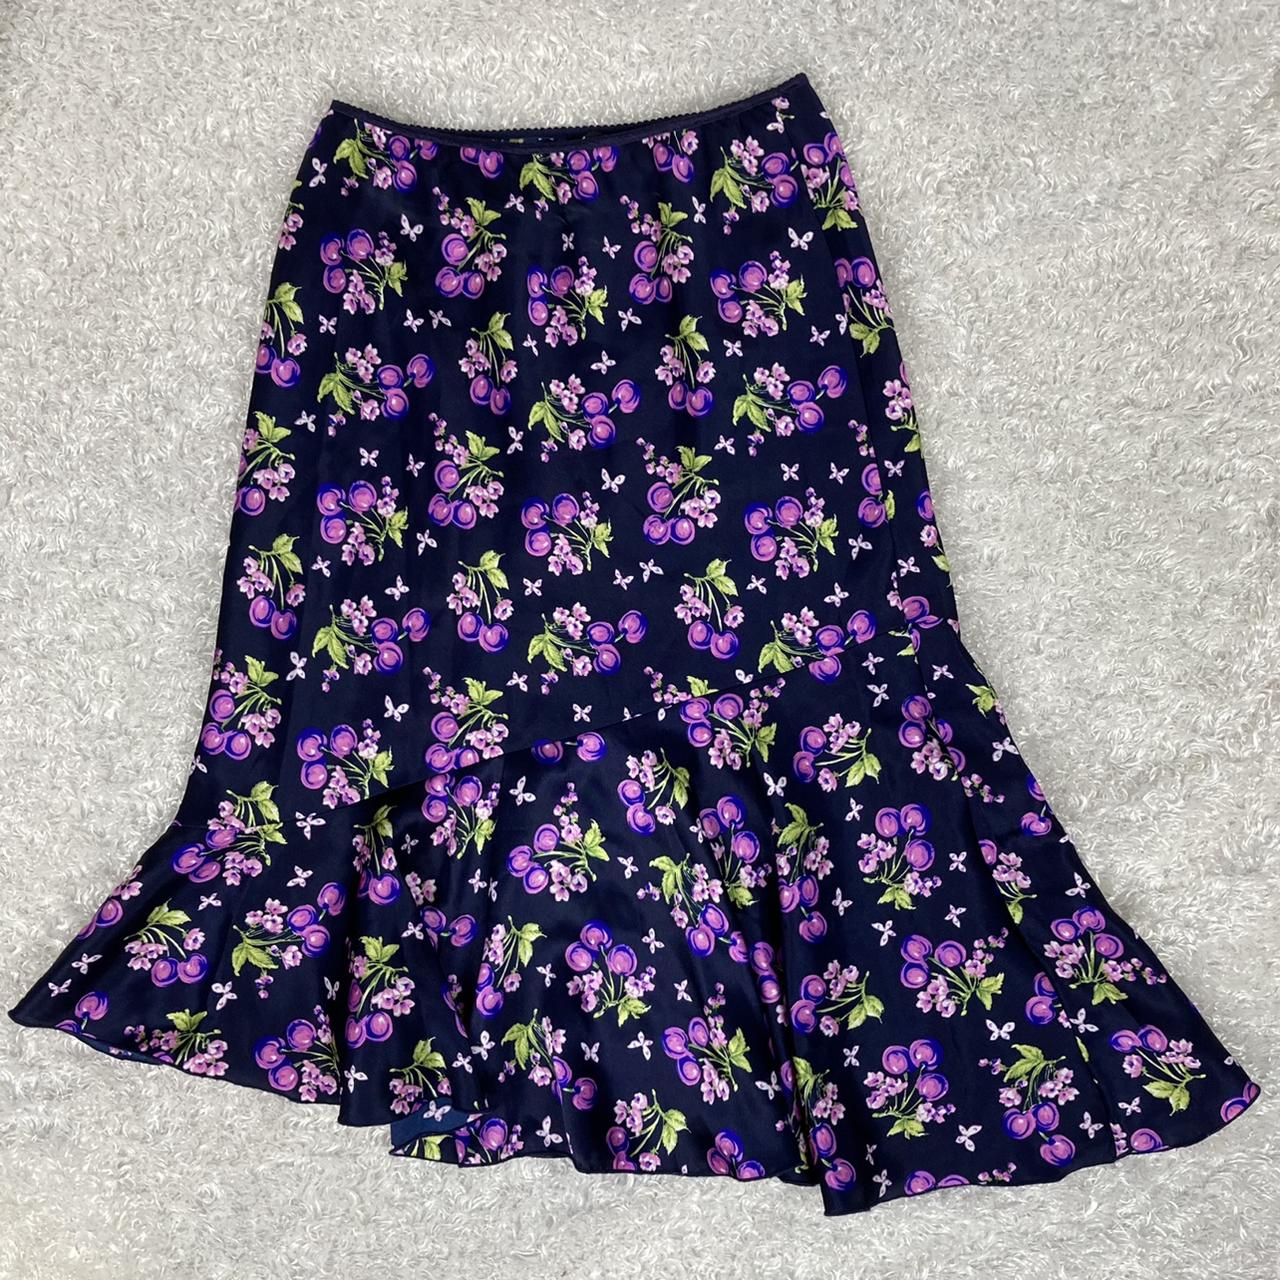 Hype Women's Purple and Green Skirt (2)